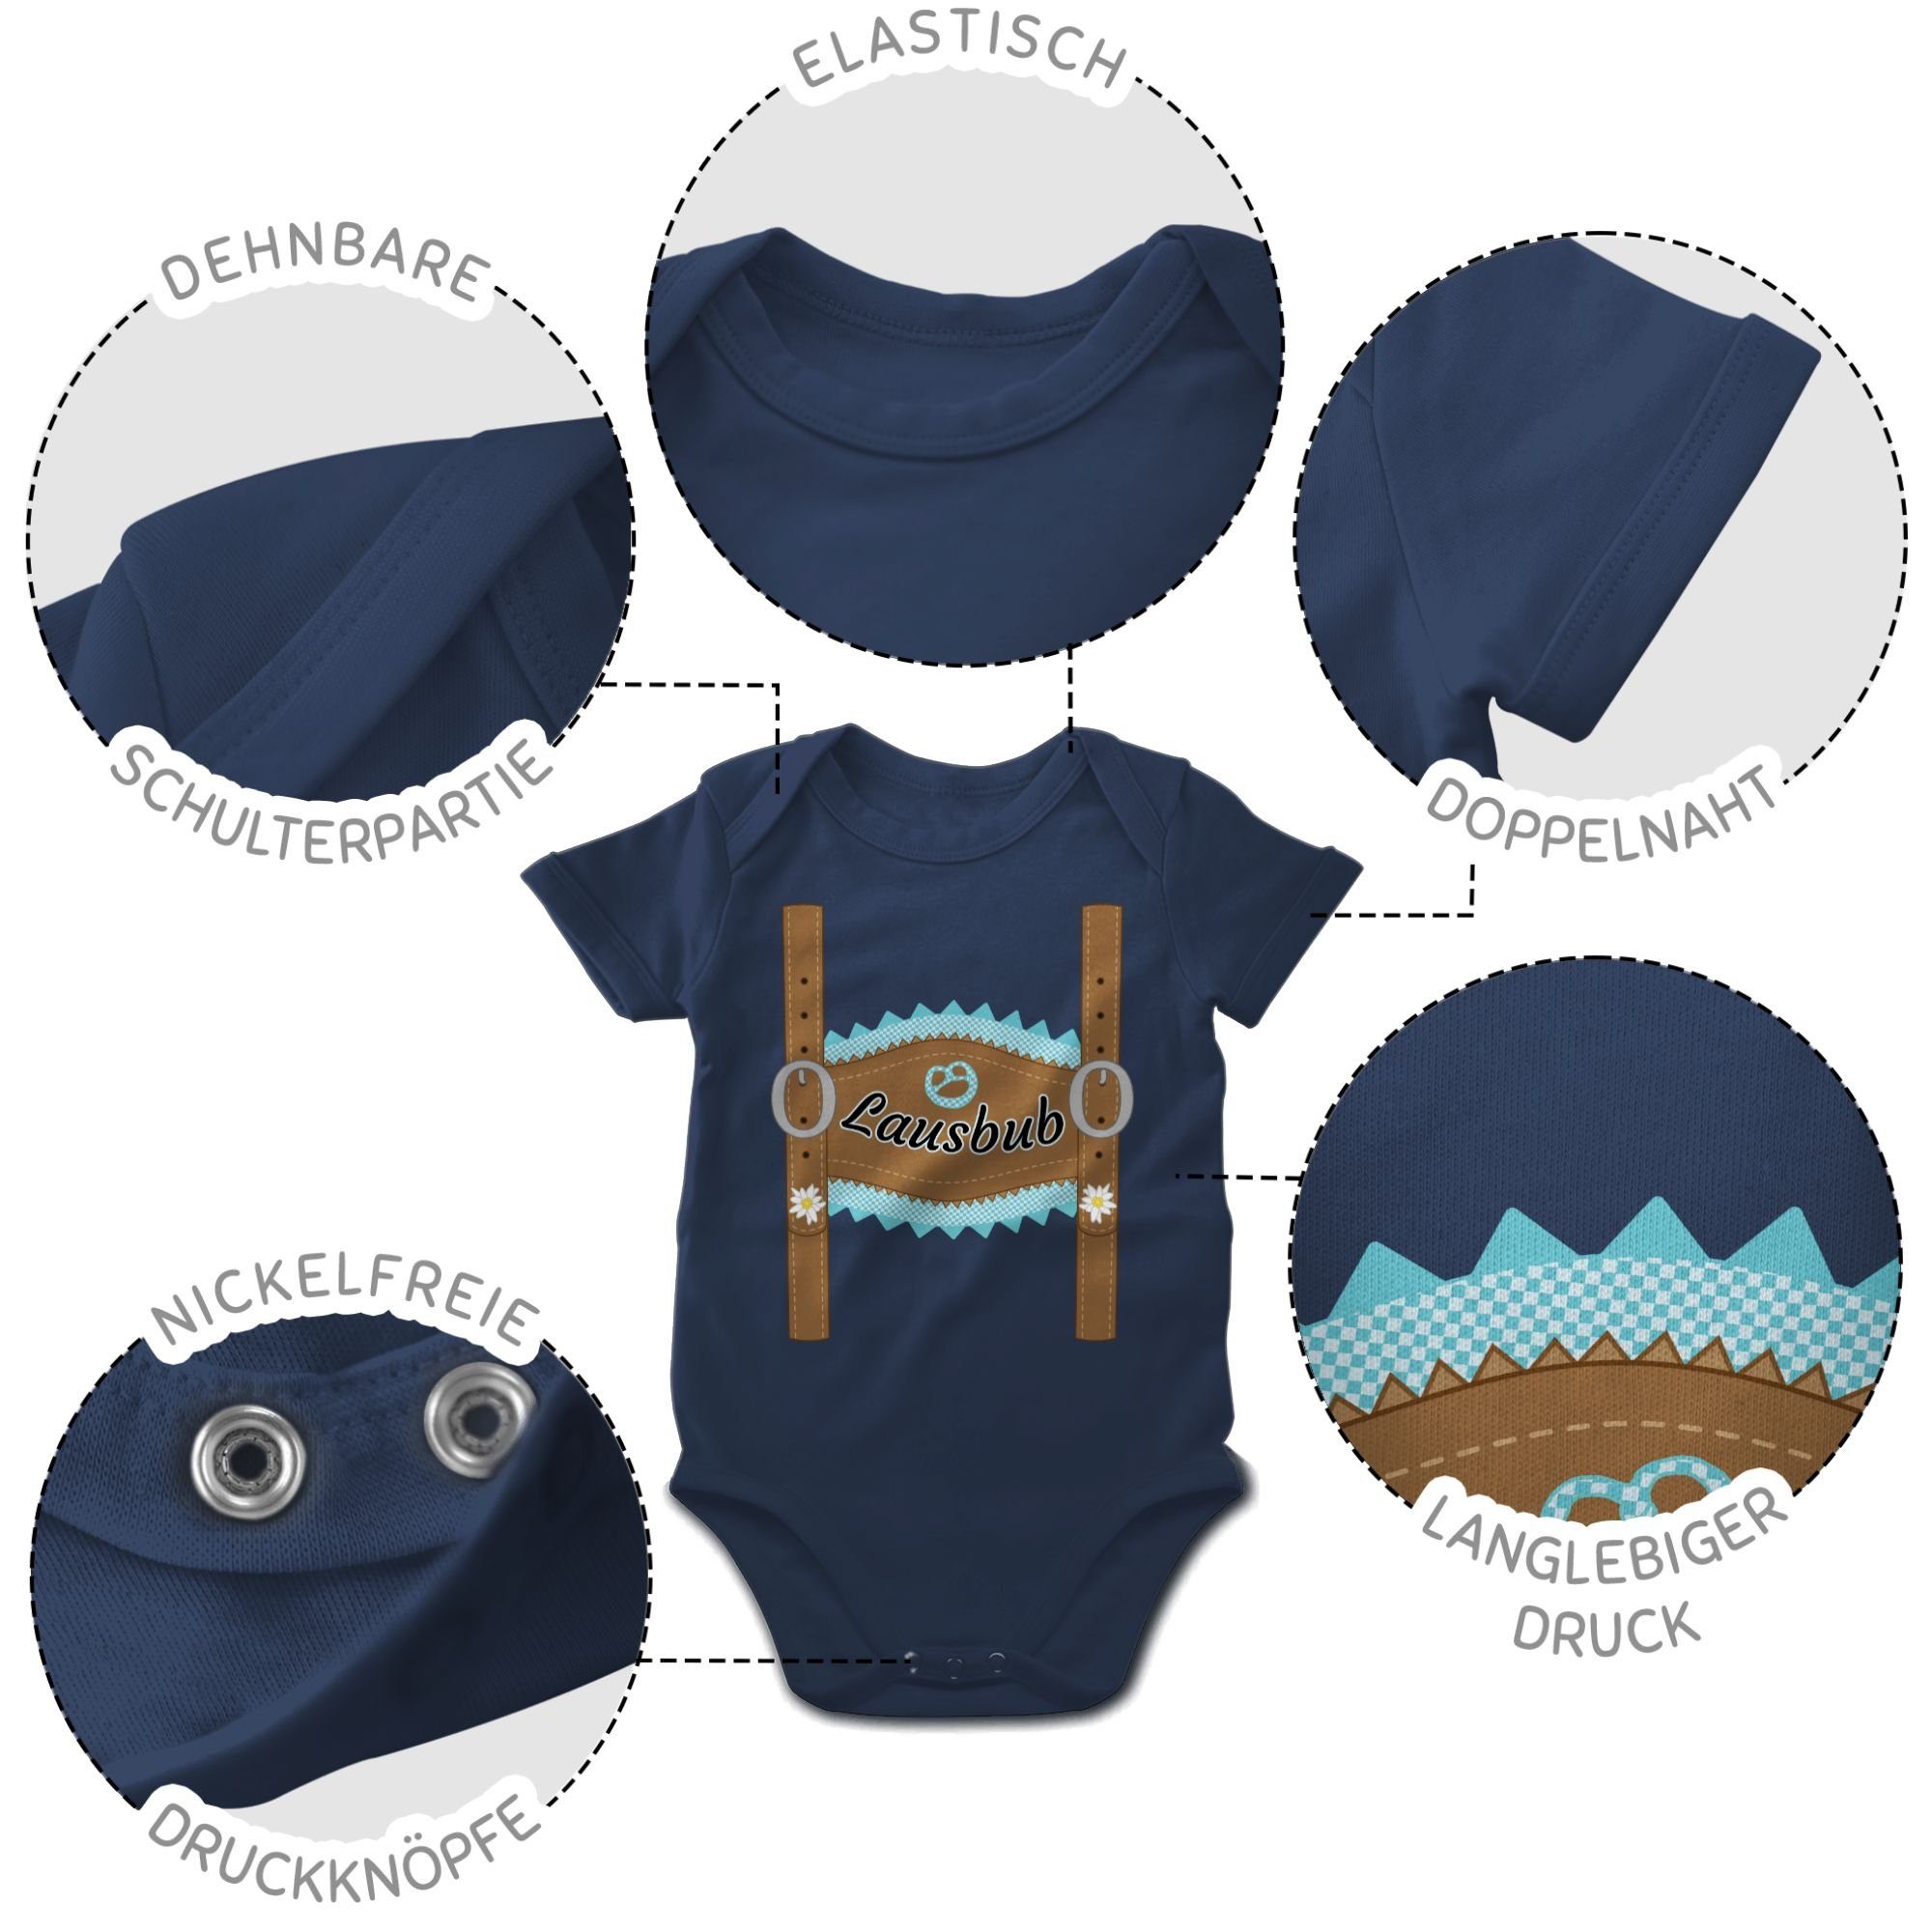 Lederhose Lausbub Outfit Oktoberfest Shirtbody Mode Navy Baby Blau 1 Shirtracer für